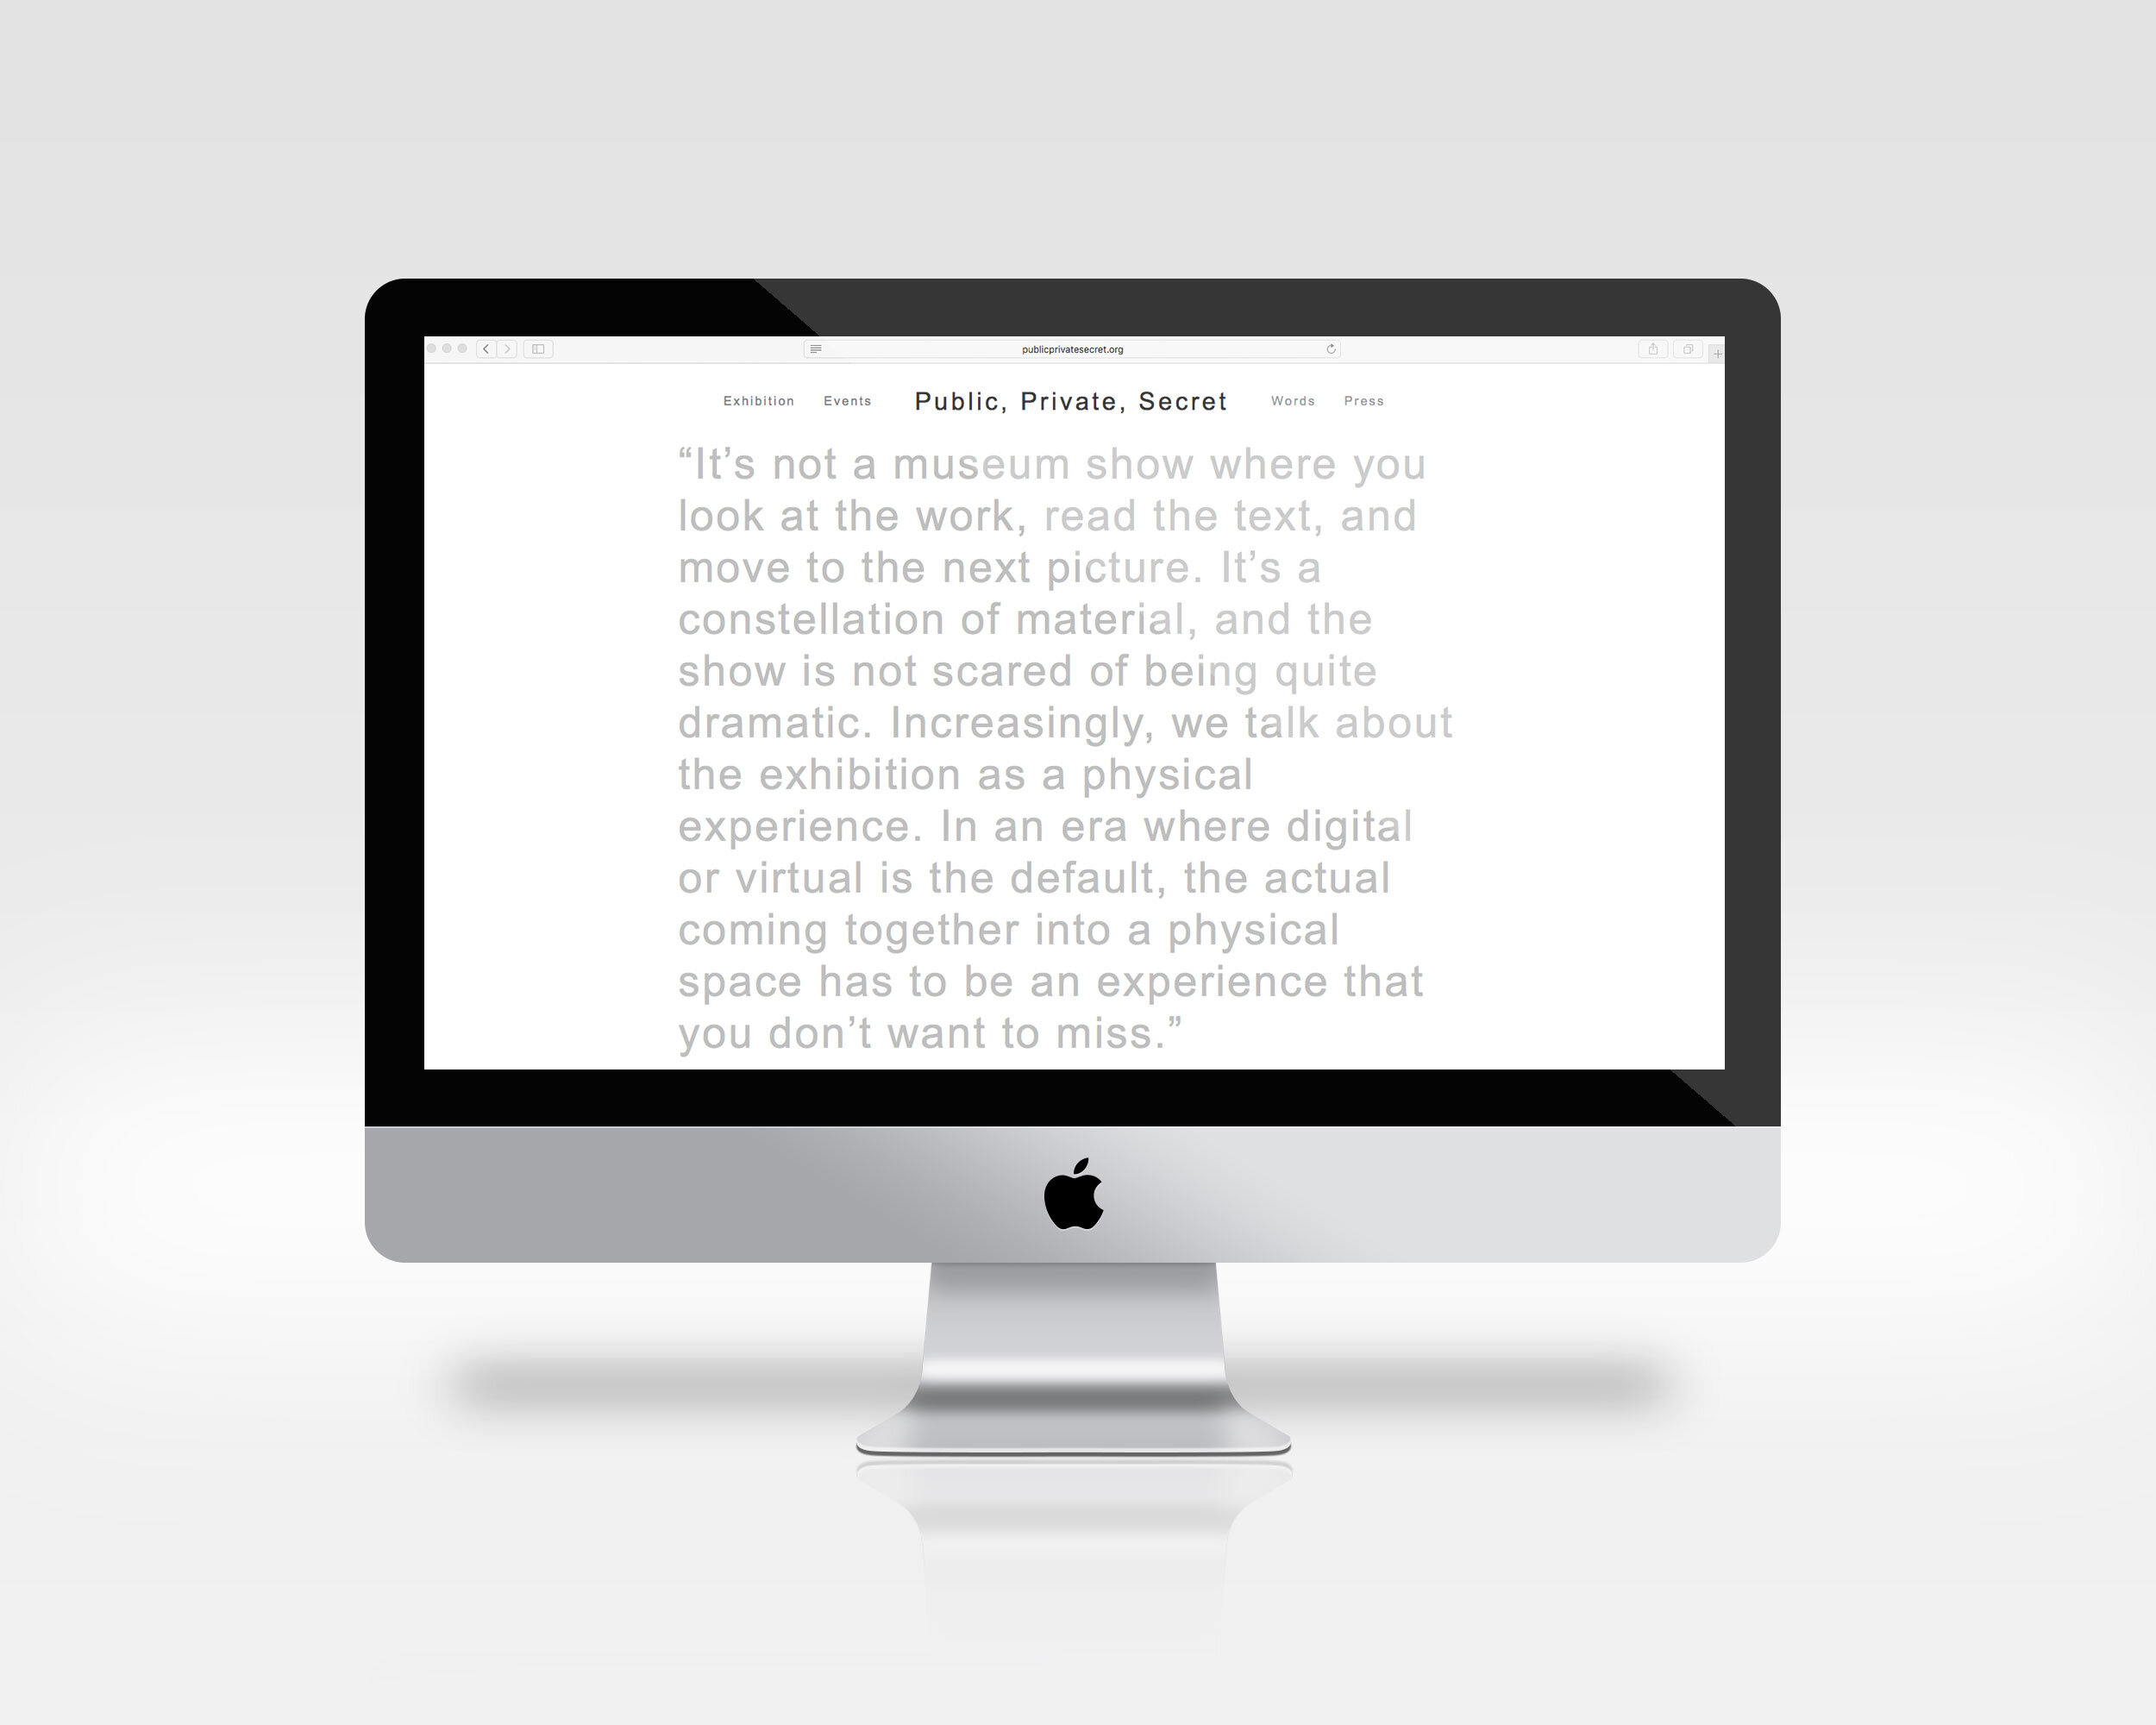 iMac-psd-mockup-pps-5-quote-2.jpg